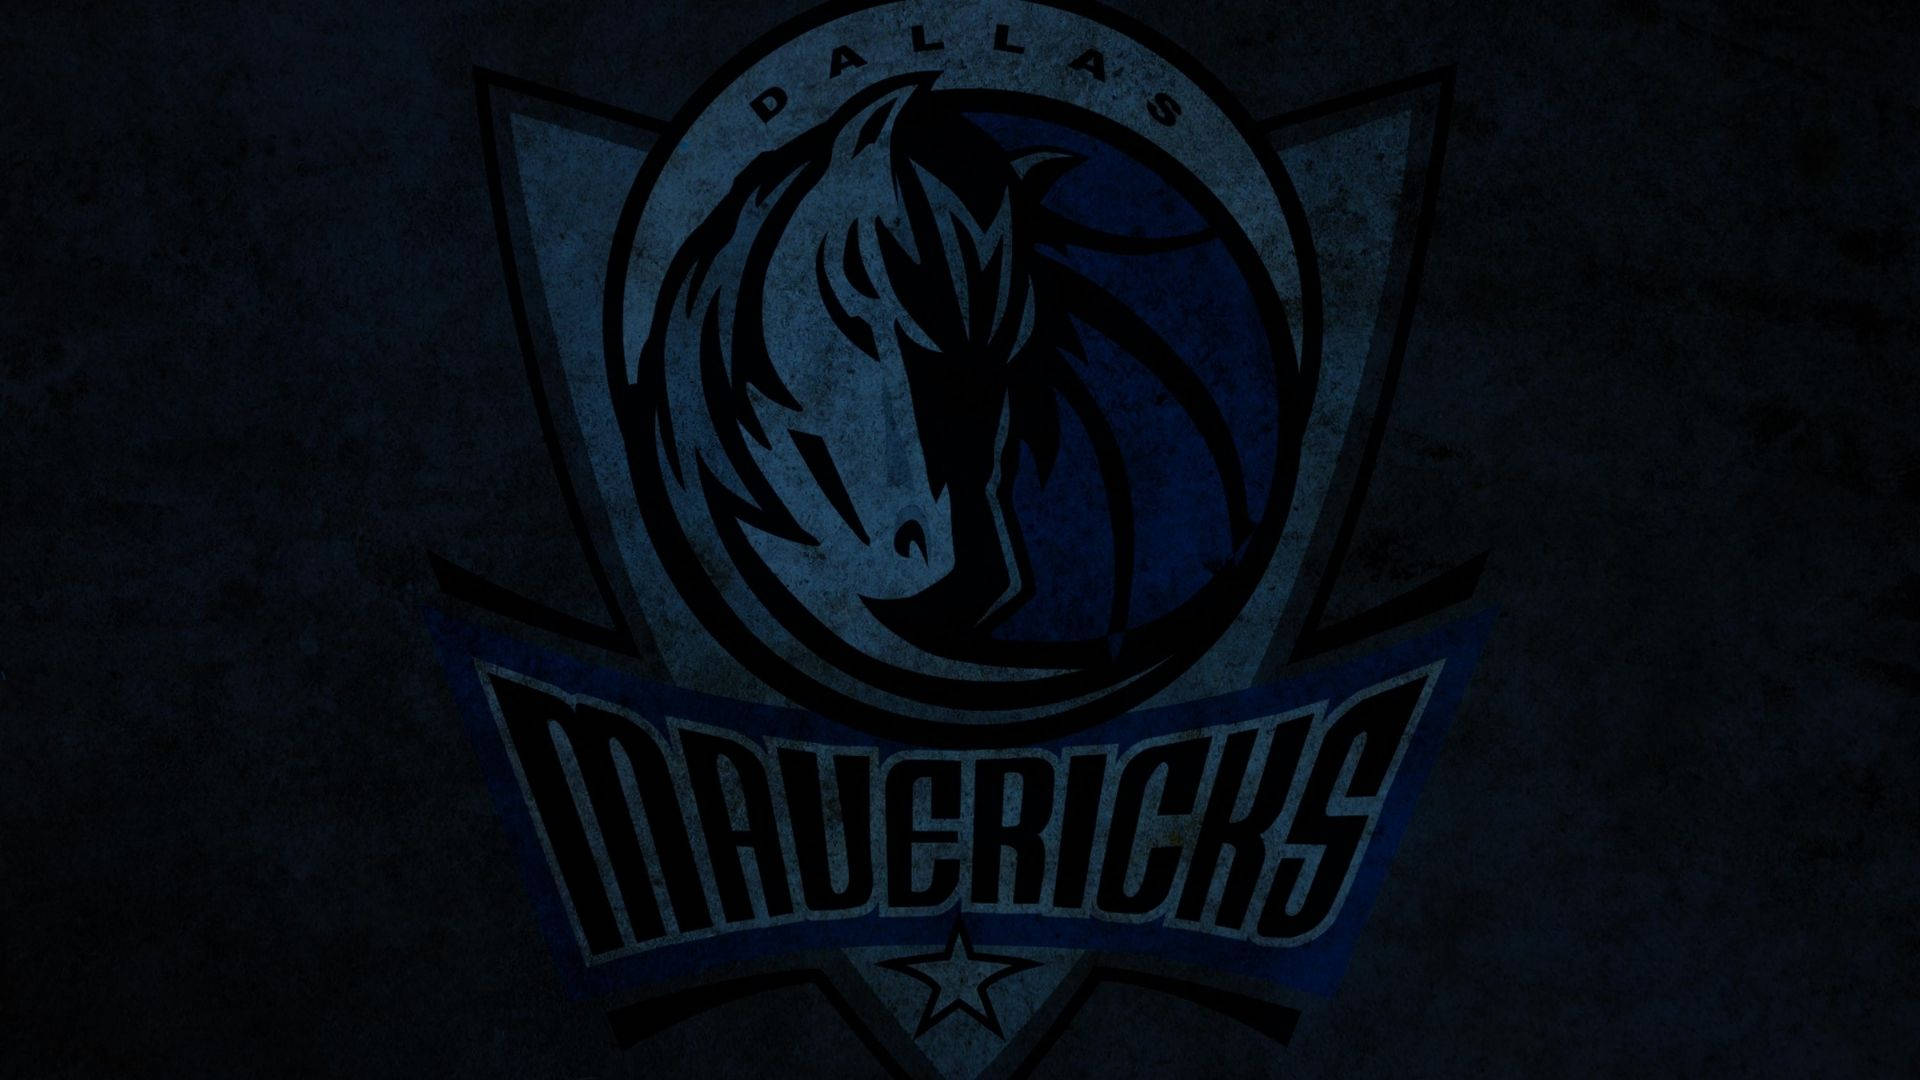 Dallas Mavericks In The Dark Background